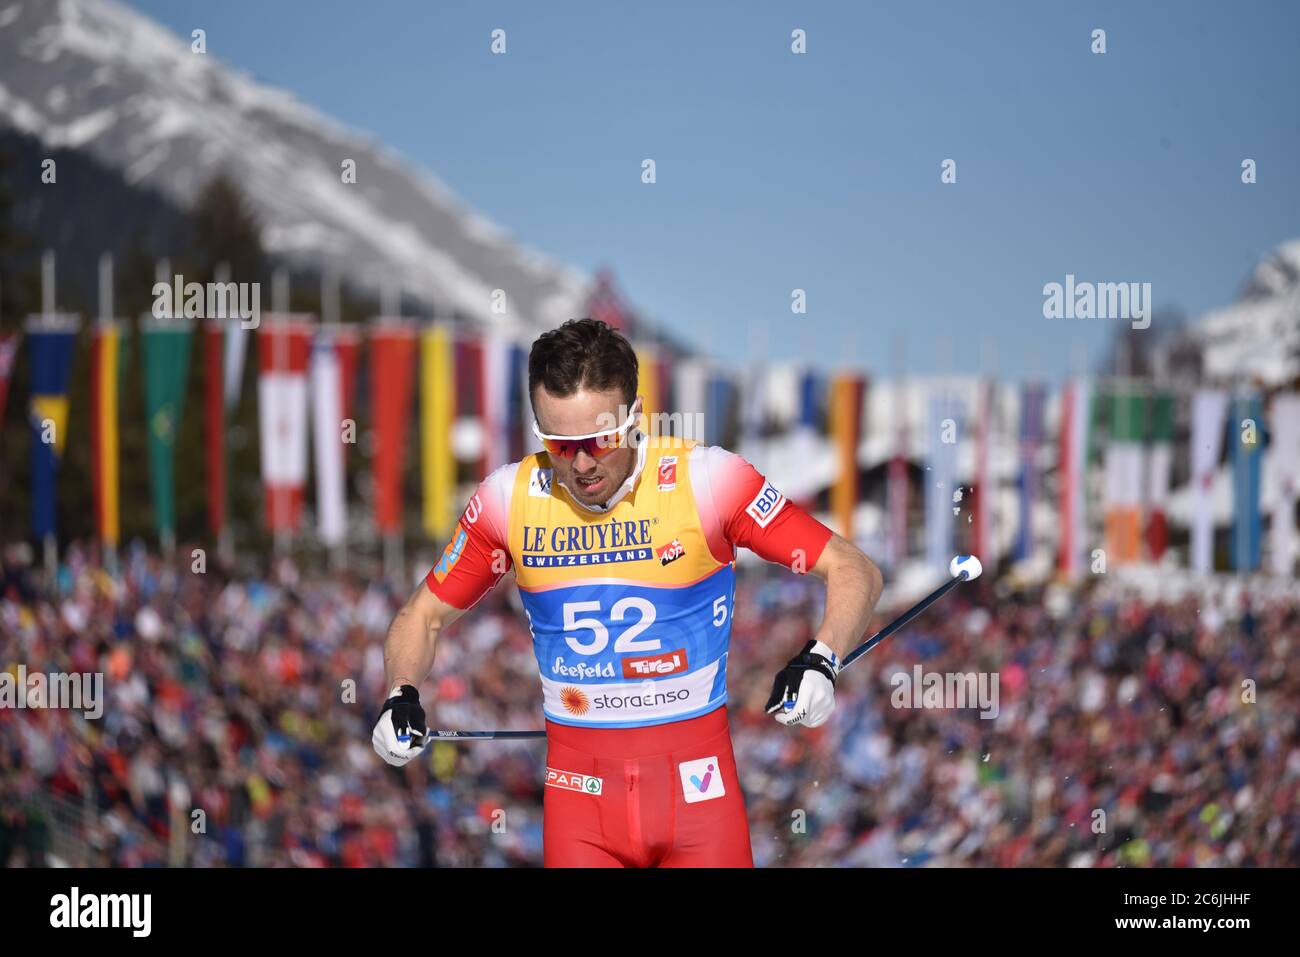 Norway's Emil Iversen races in the 15 K, Nordic World Championships, Seefeld, Austria, 2019. Stock Photo